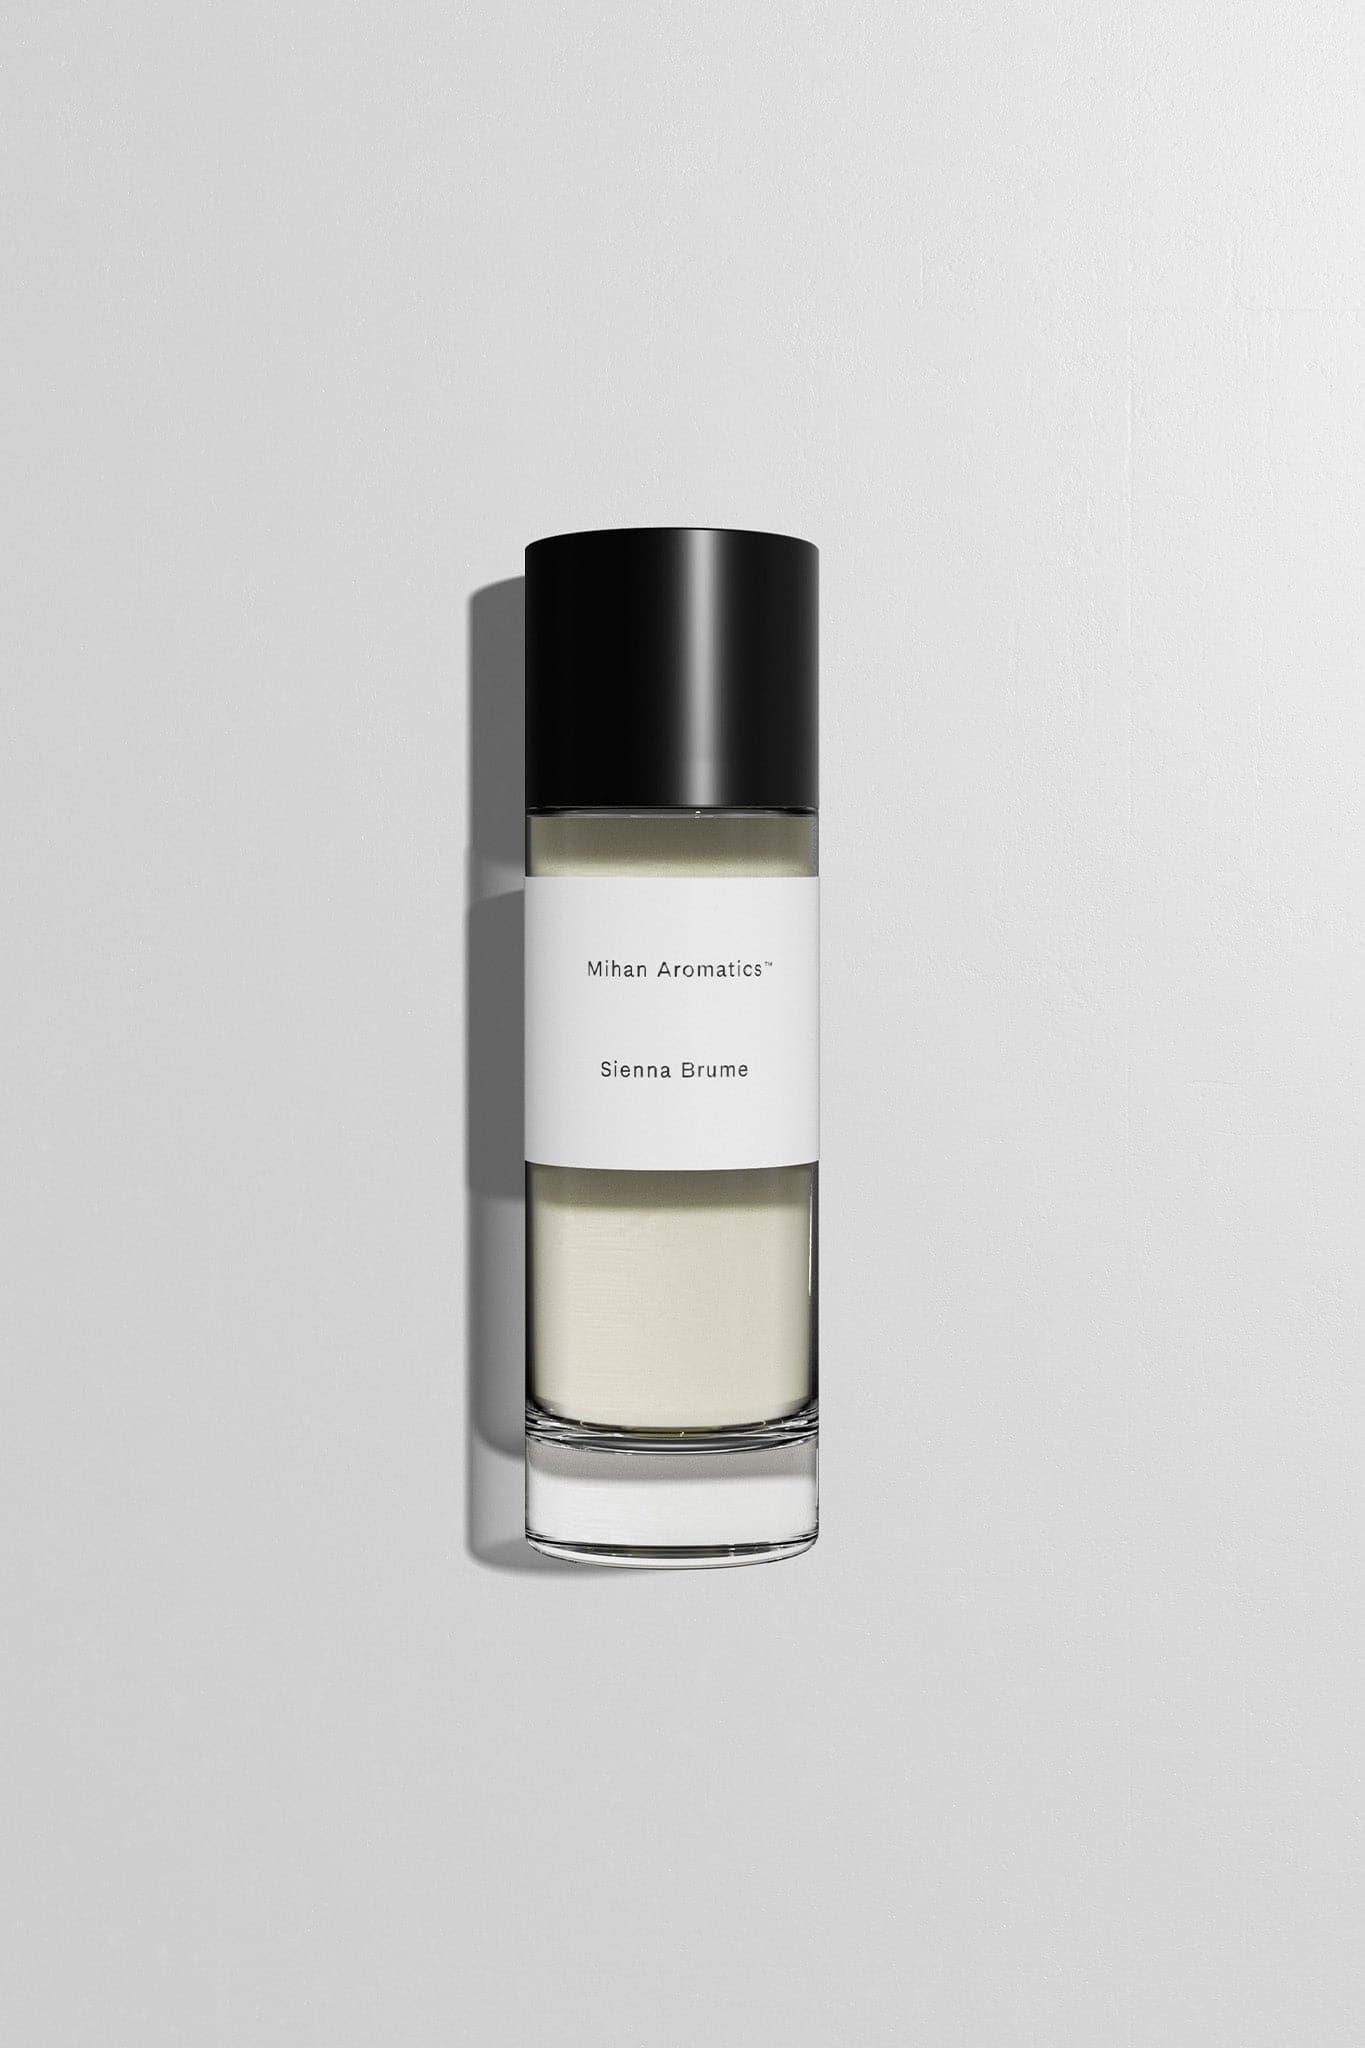 Mihan Aromatics - Sienna Brume Parfum - Marz Designs AUMihan Aromatics